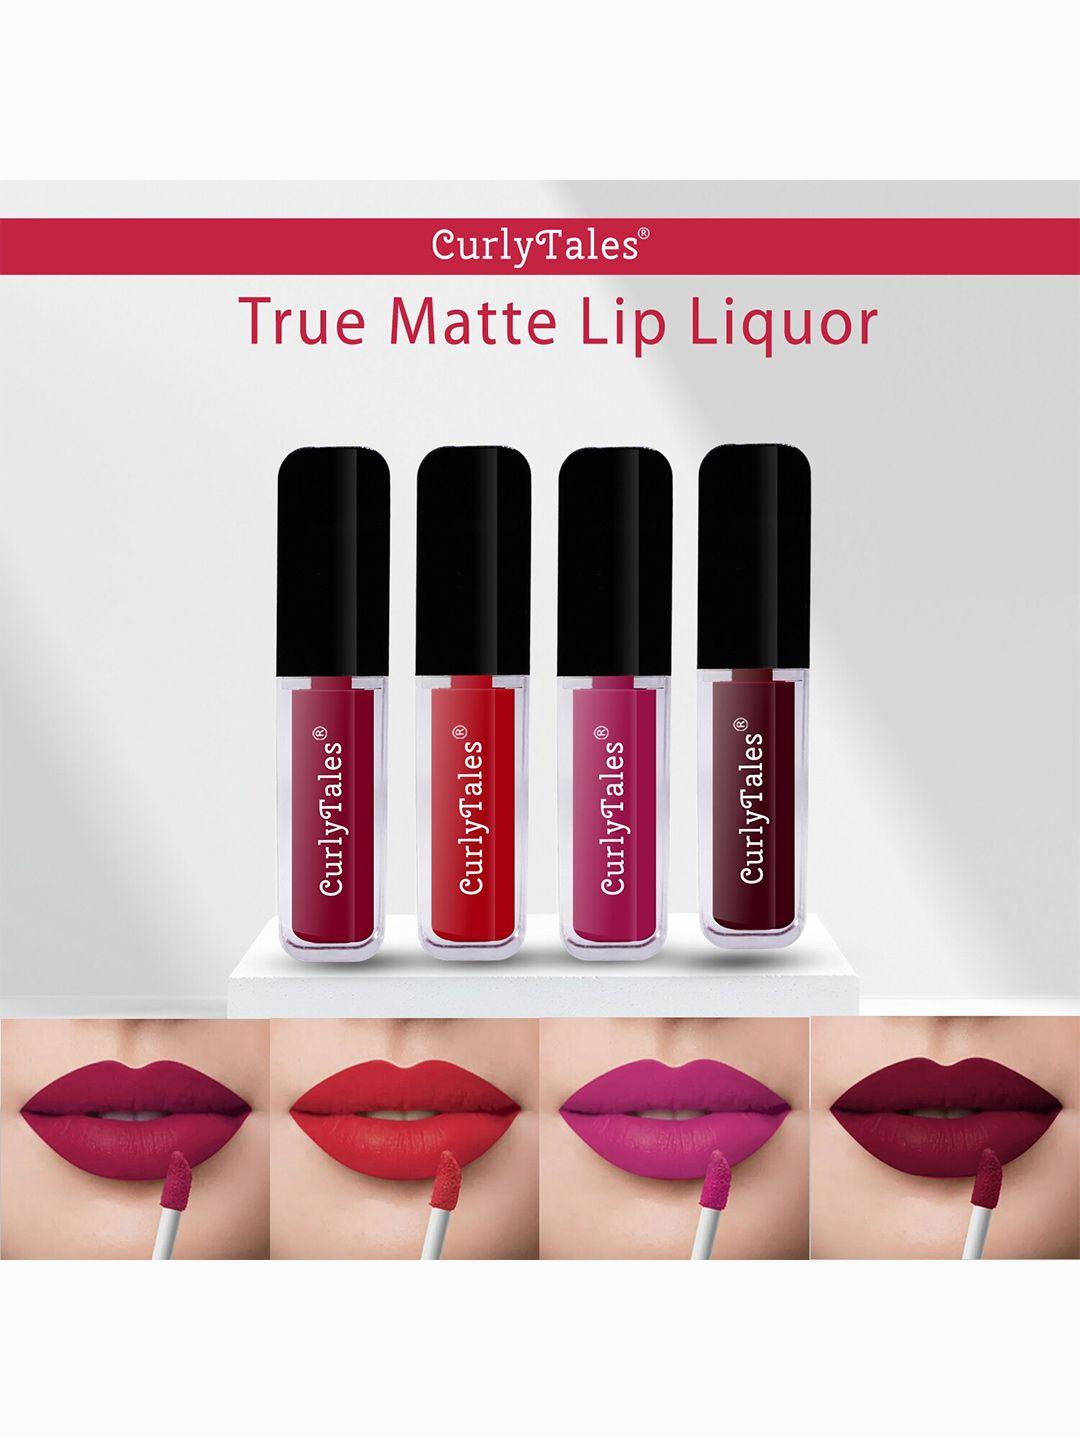 curlytales set of 4 lightweight & waterproof true matte liquid lipsticks 4 ml each-cherry red 07 - red 11 - pink 12 - wine 13